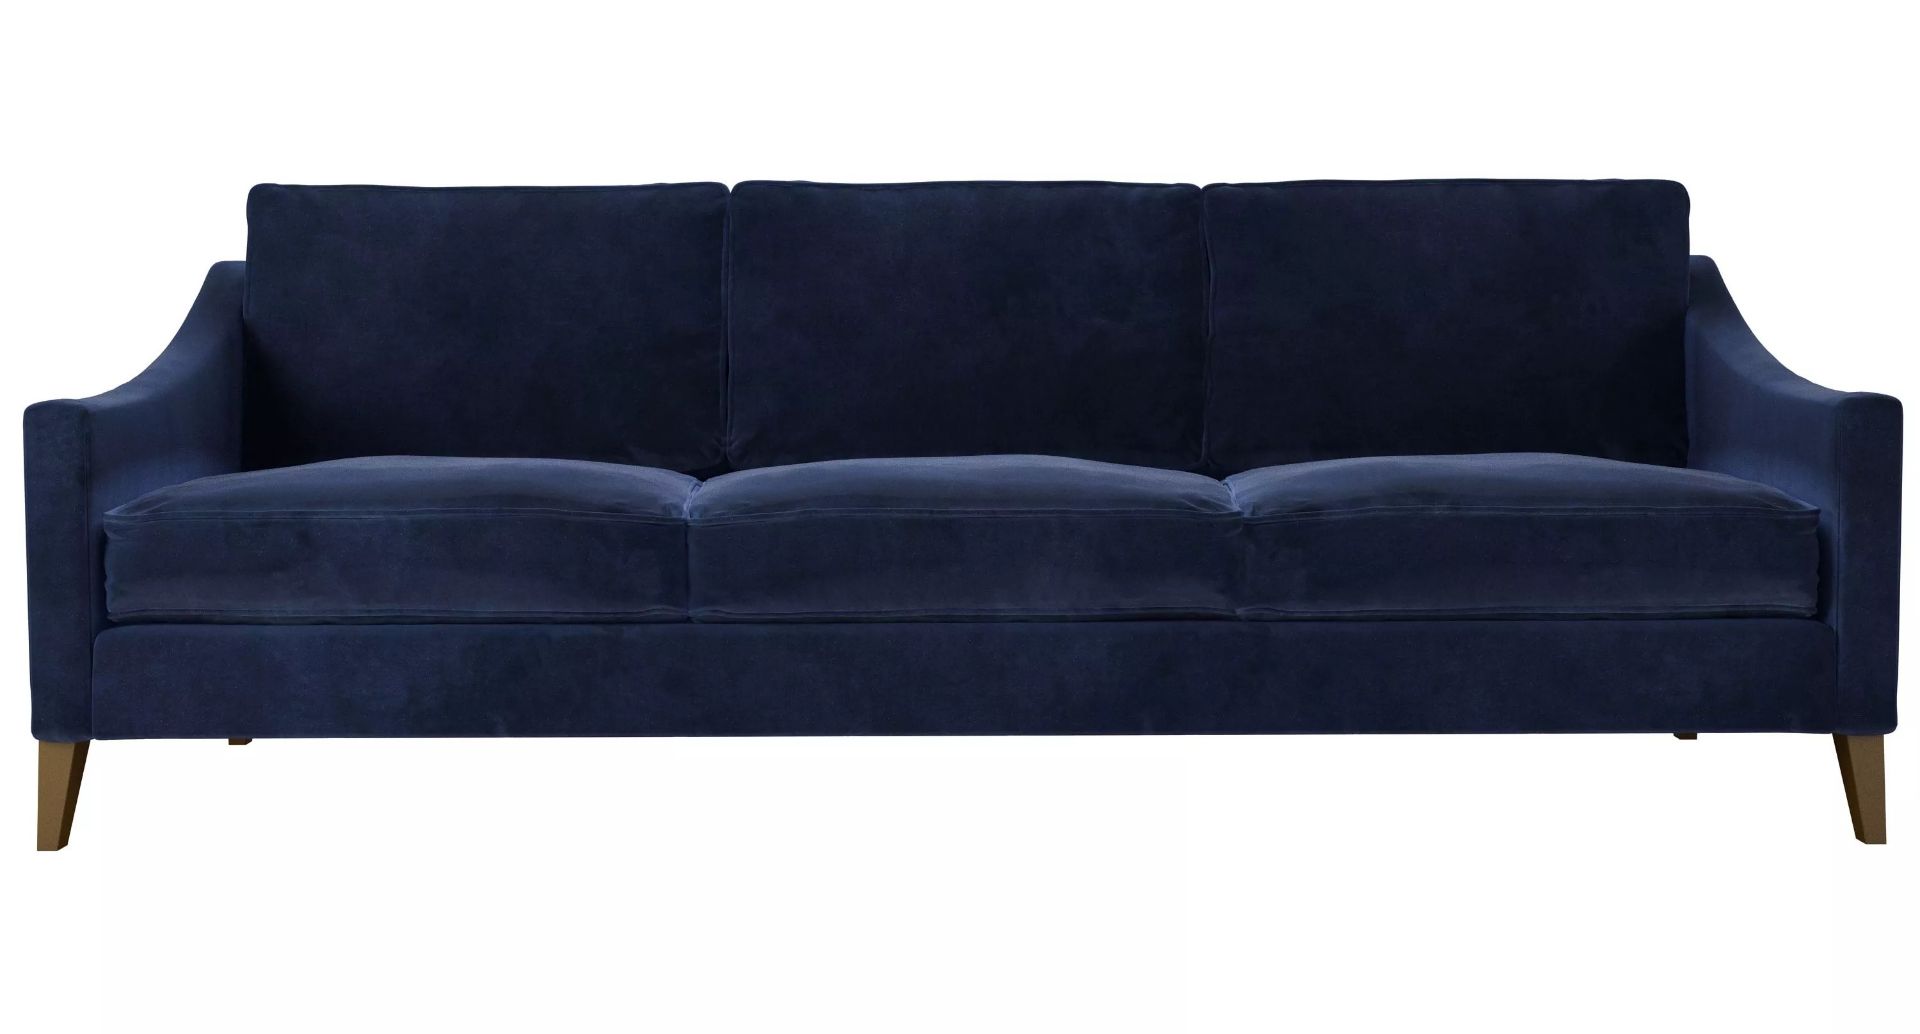 Iggy 4 Seat Sofa In Cruise Smart Velvet RRP - £2870